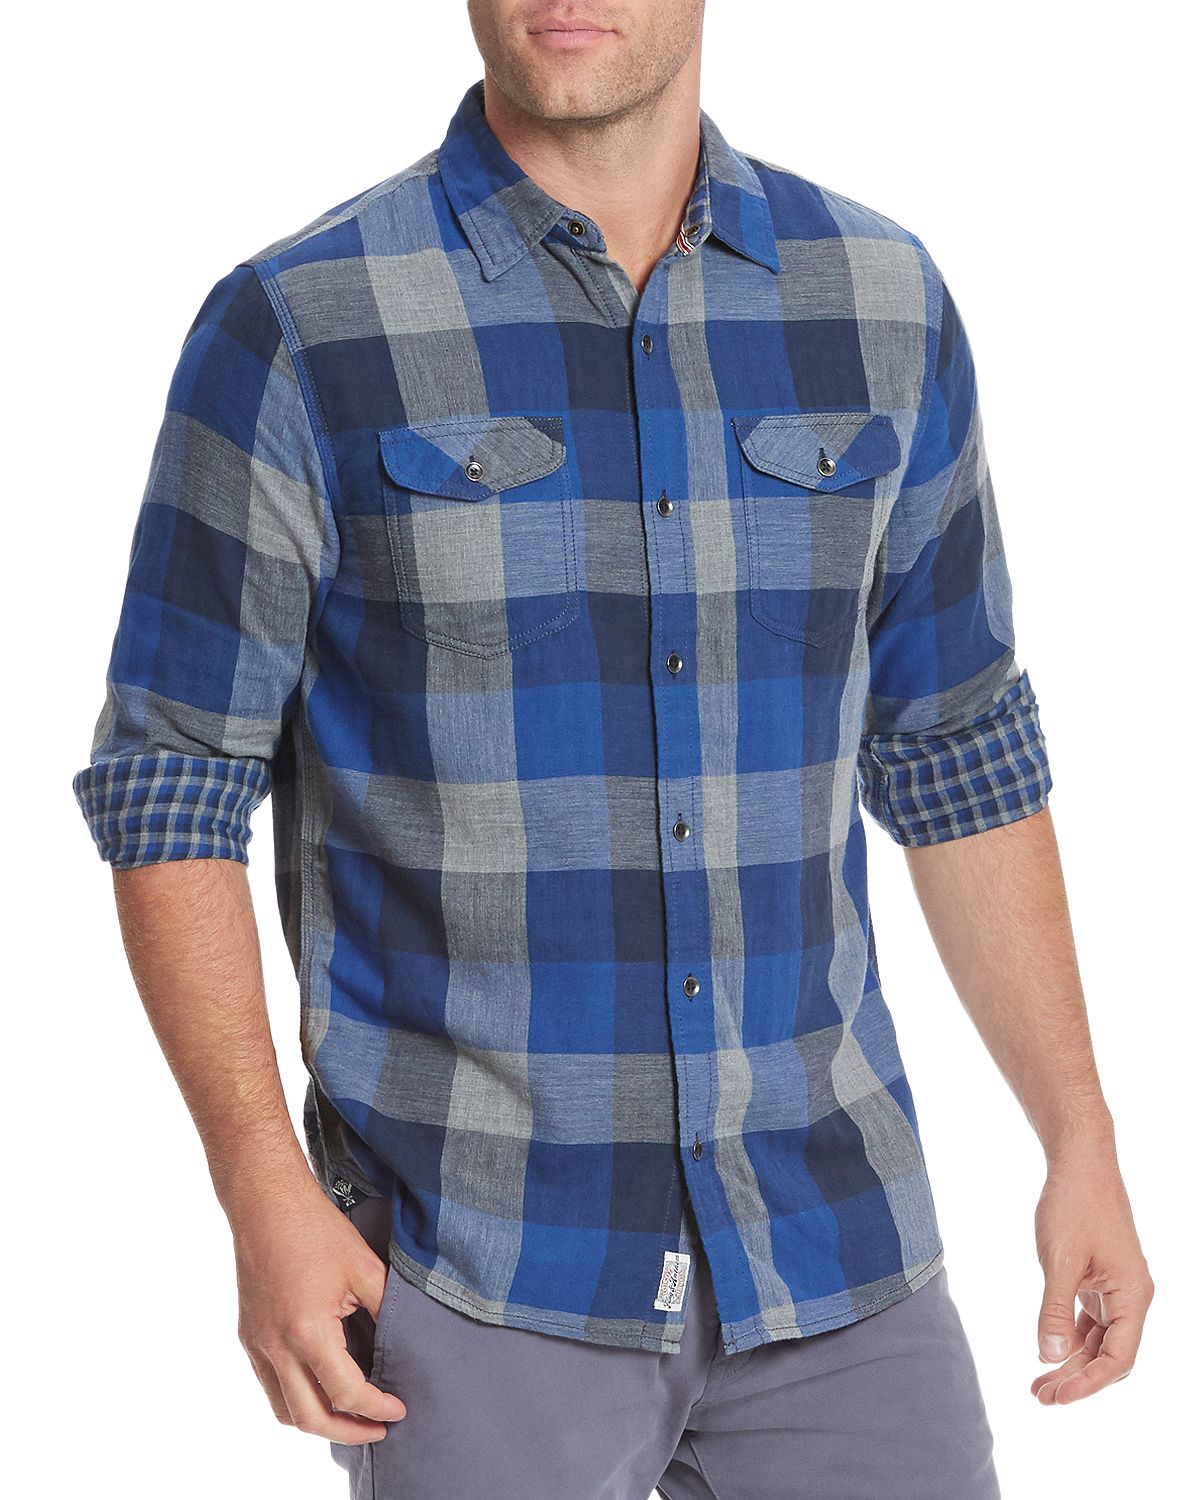 Flag & Anthem Benton Plaid Flannel Regular Fit Button-down Shirt Blue Combo